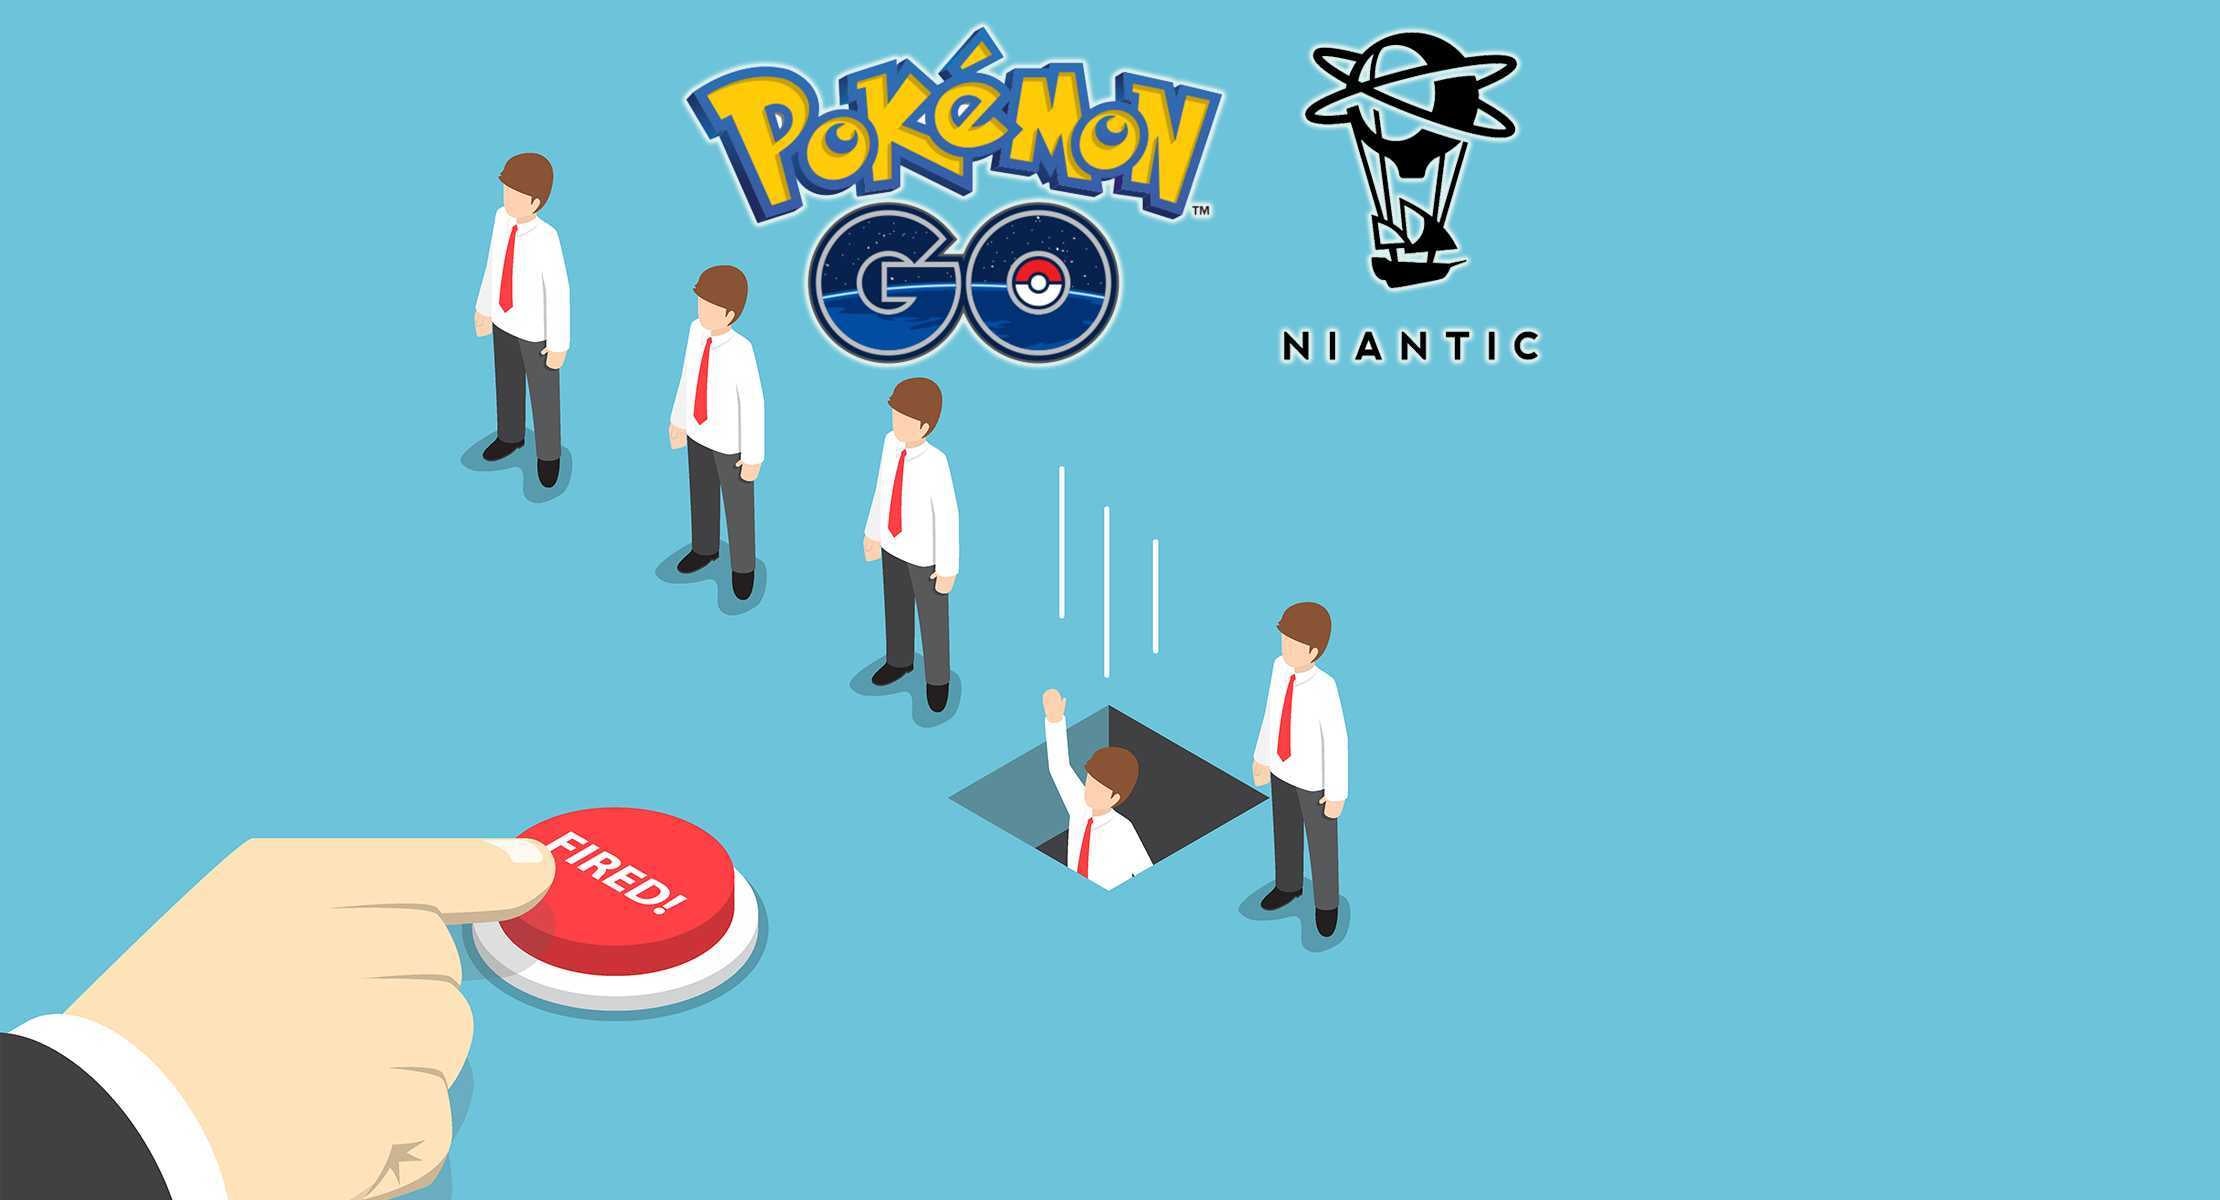 Pokémon Go' developer Niantic is laying off 230 employees, pokemon go 